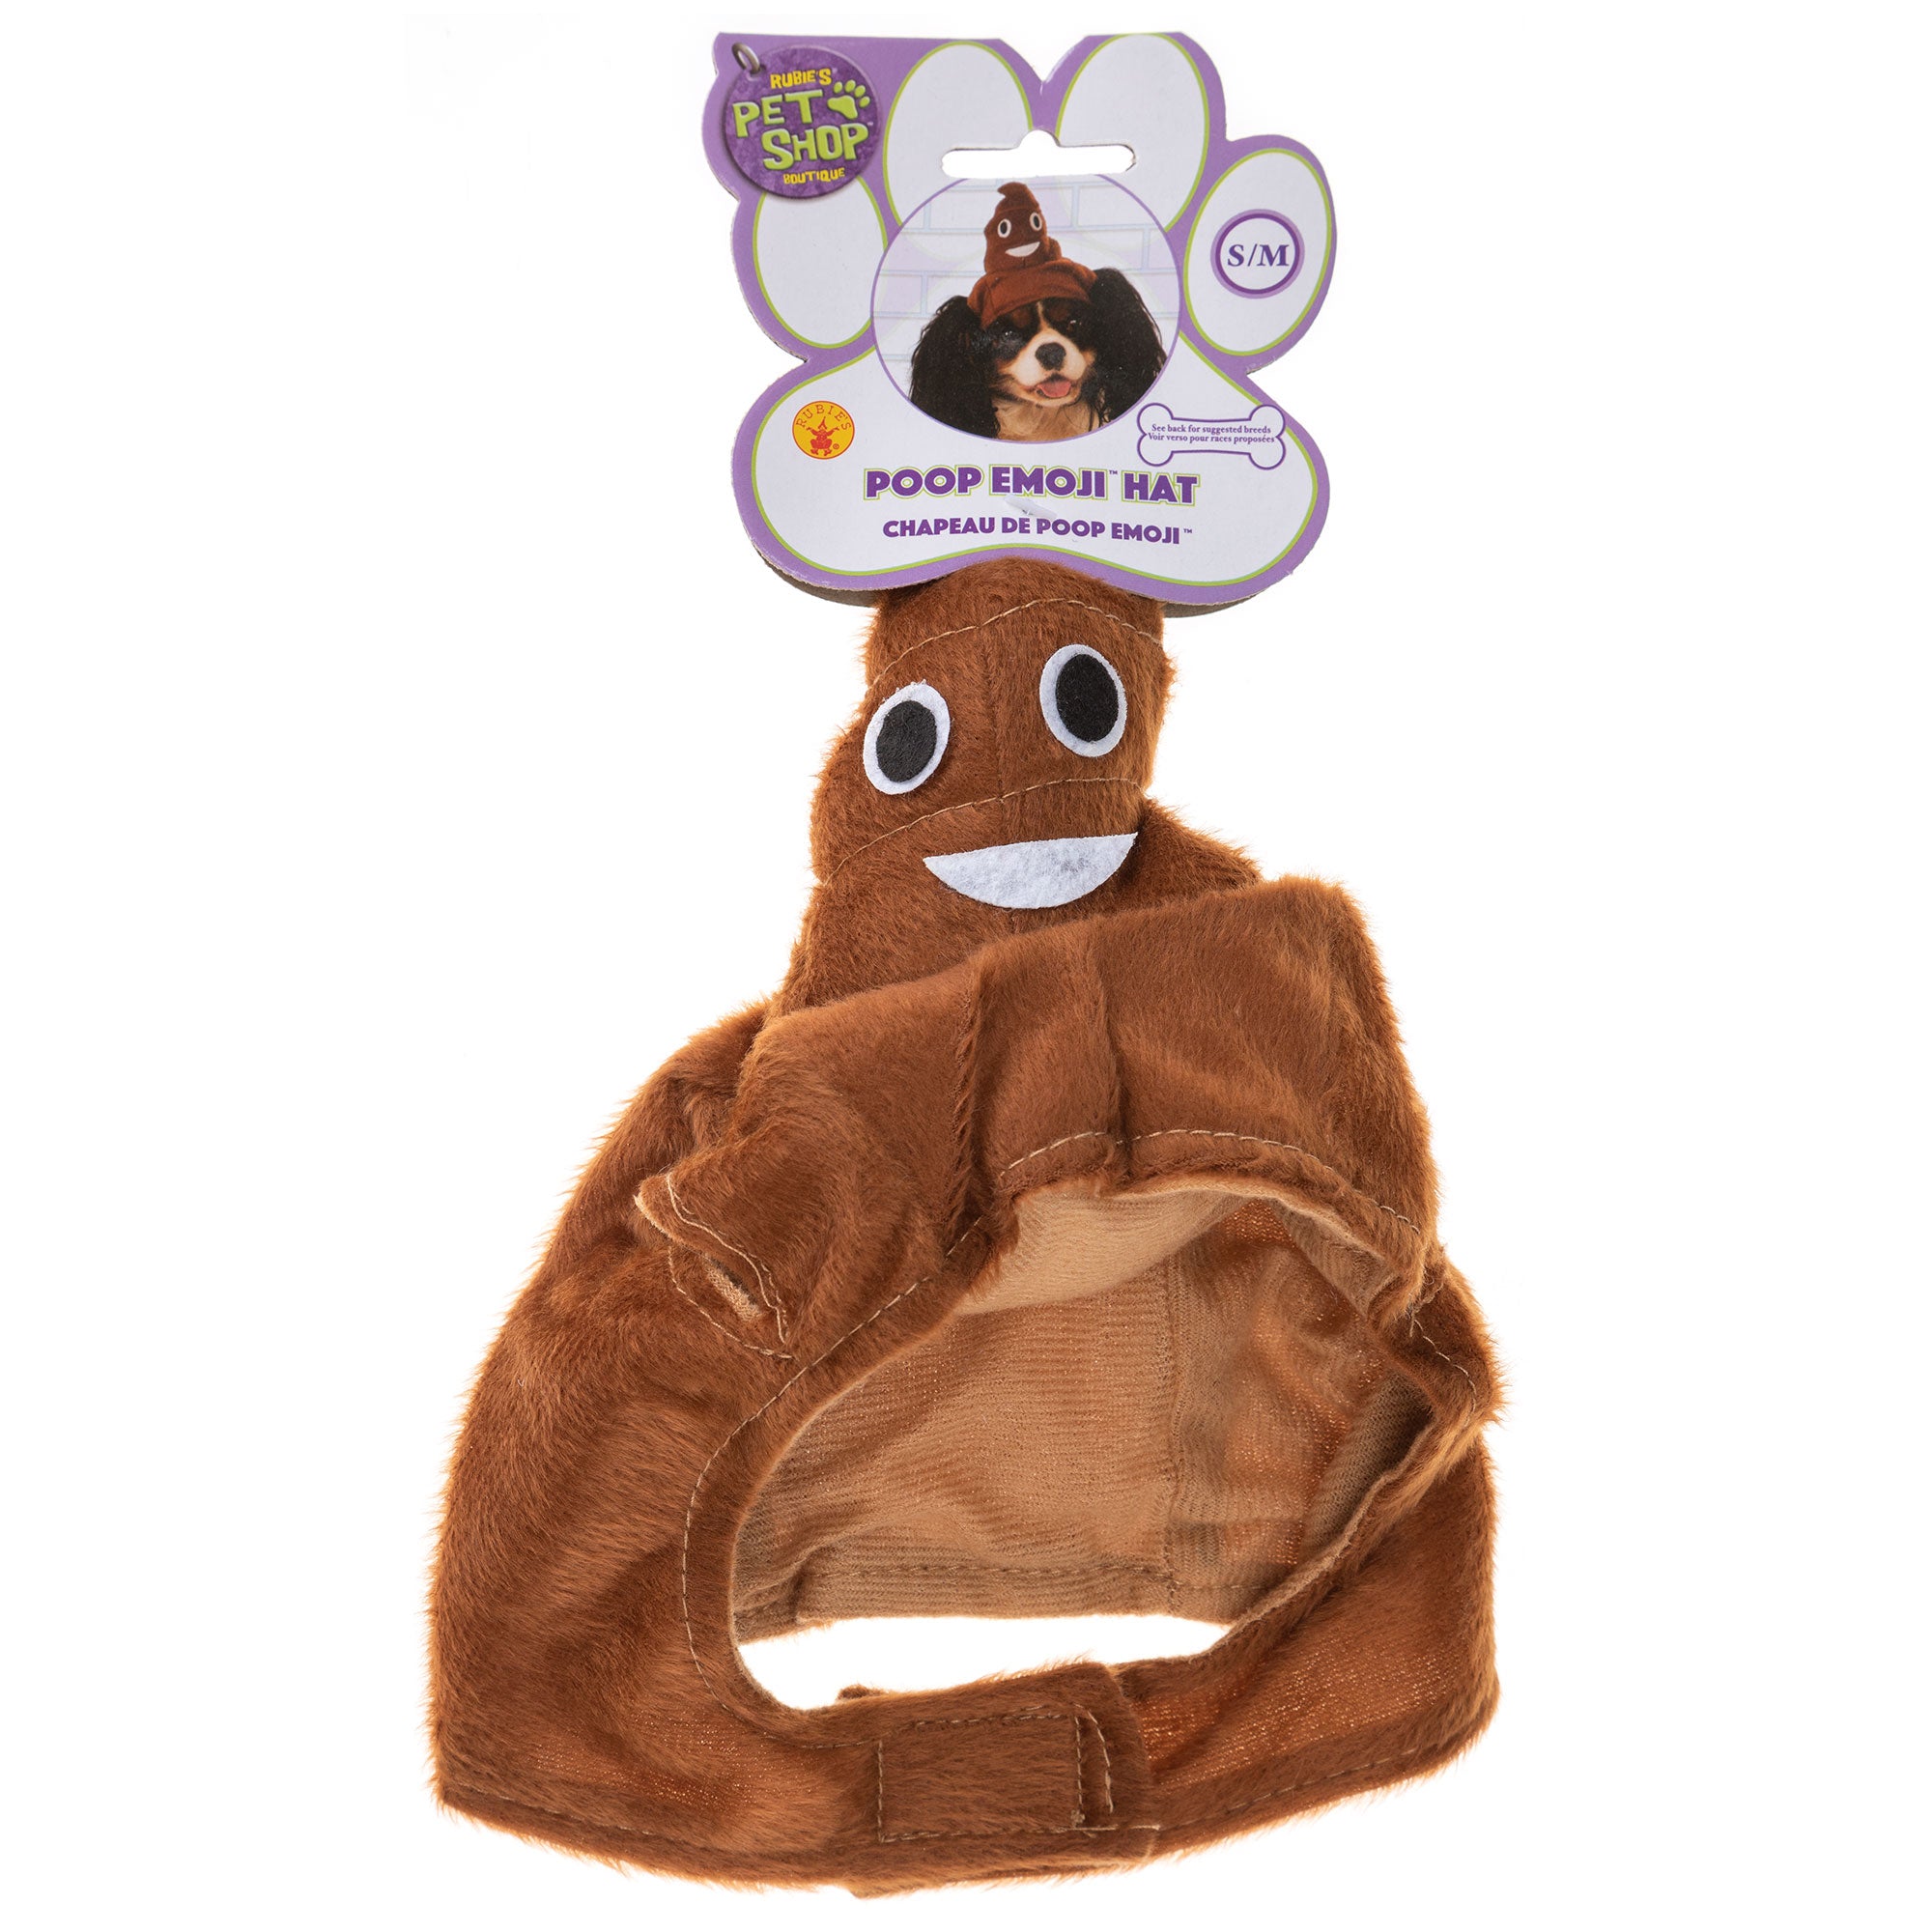 Perfectly Precious Pet Costume - Poop Emoji Hat - S/M